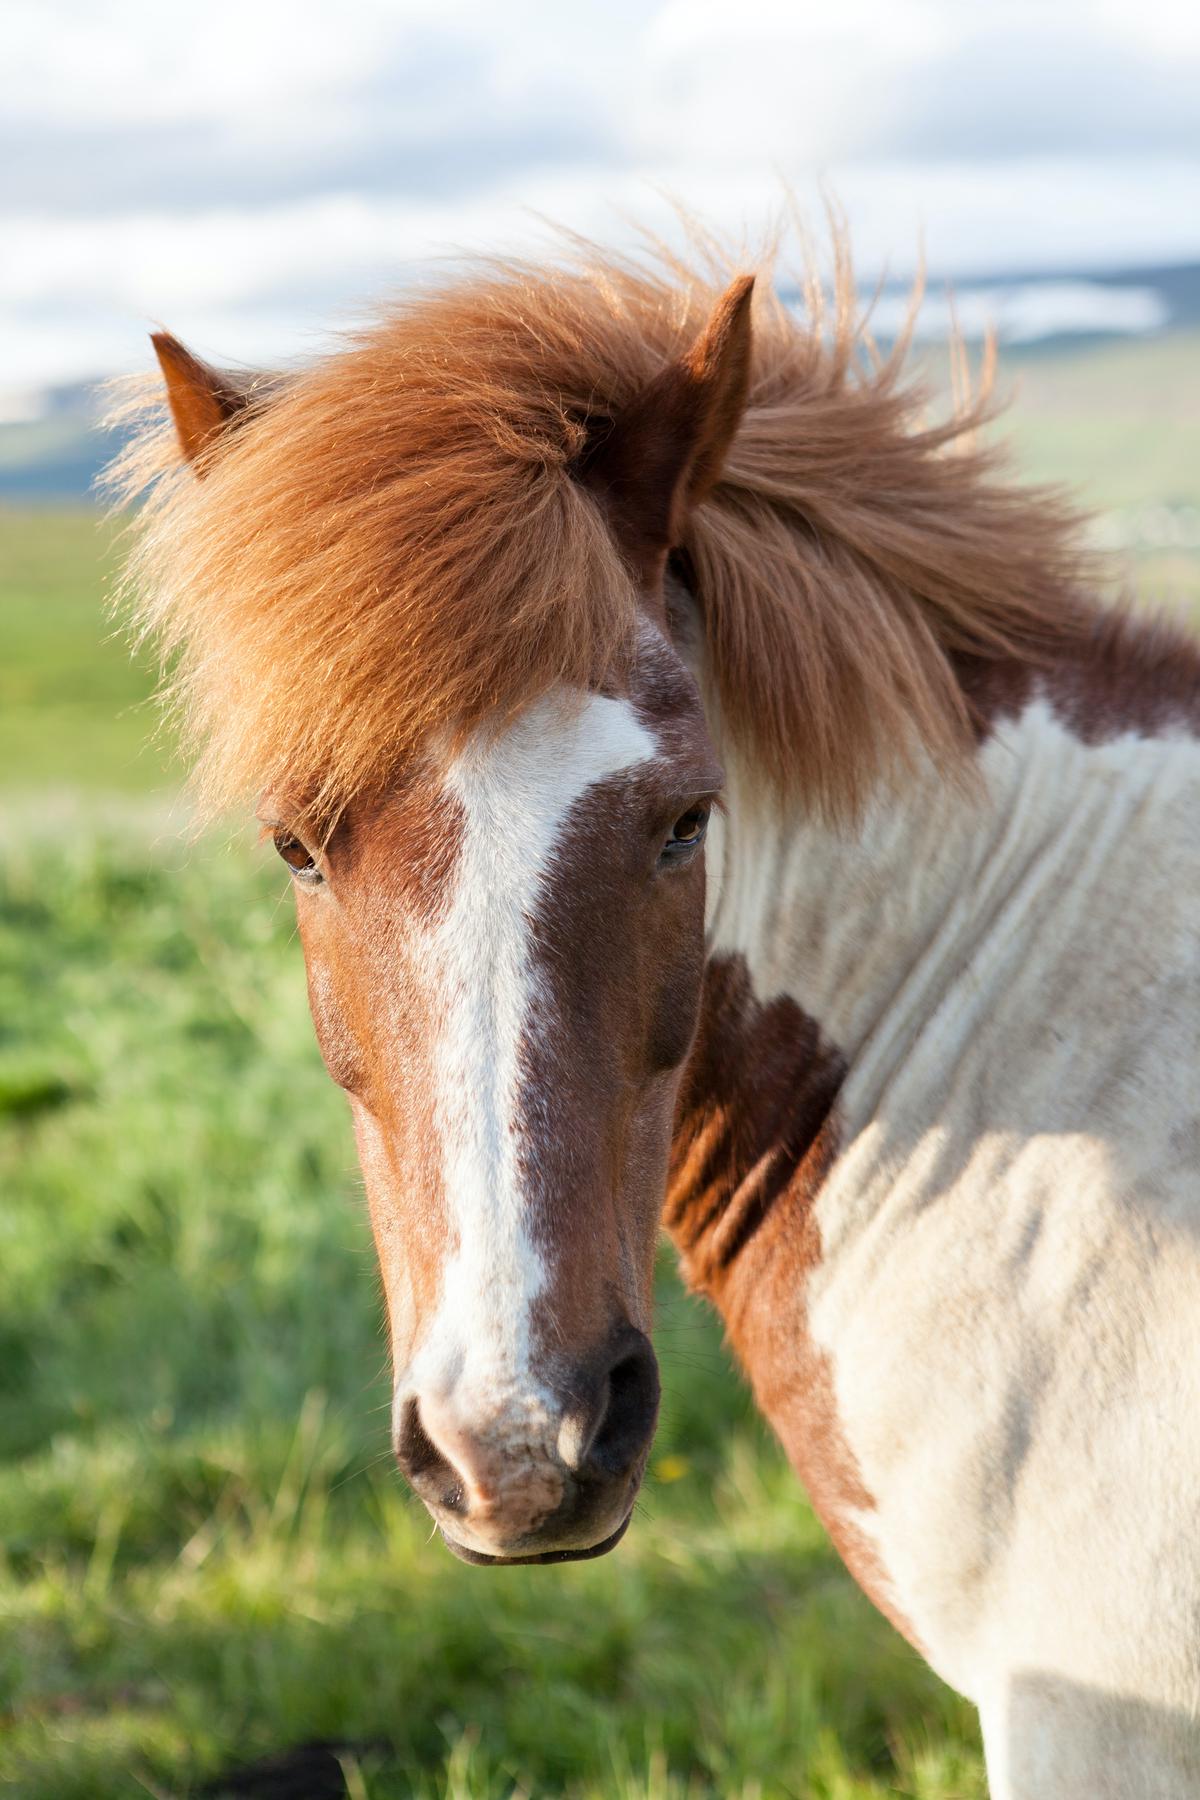 A close-up image of a warmblood horse, showcasing its sleek coat and majestic presence.